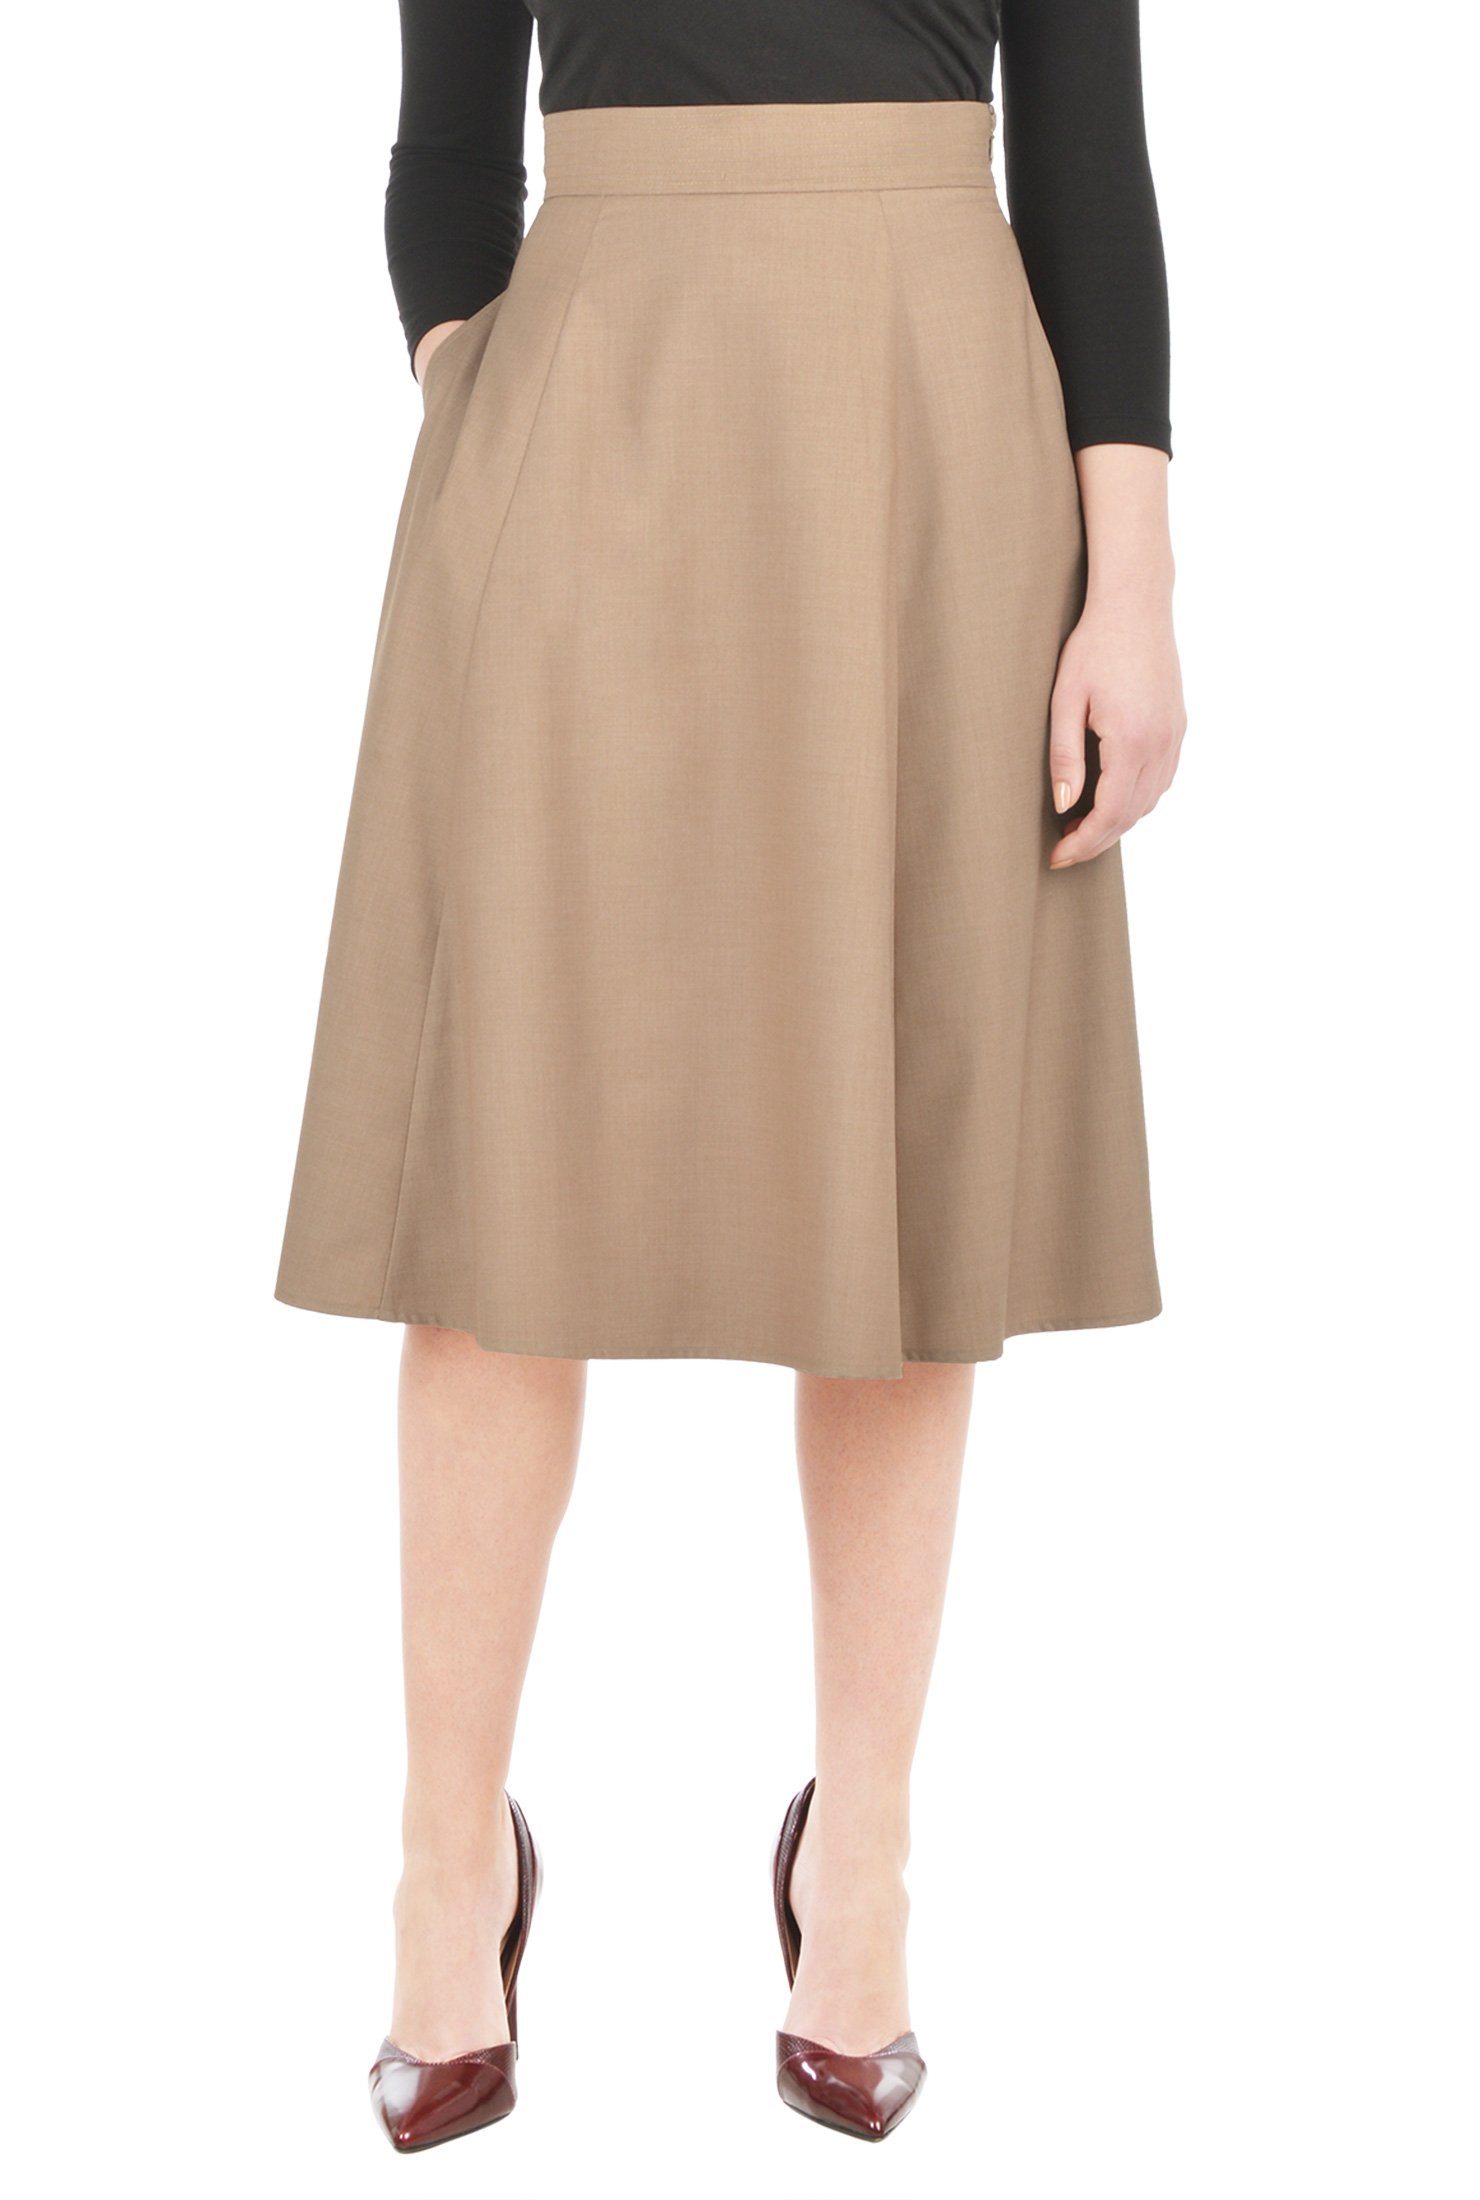 Shop Trapunto trim suiting full skirt | eShakti